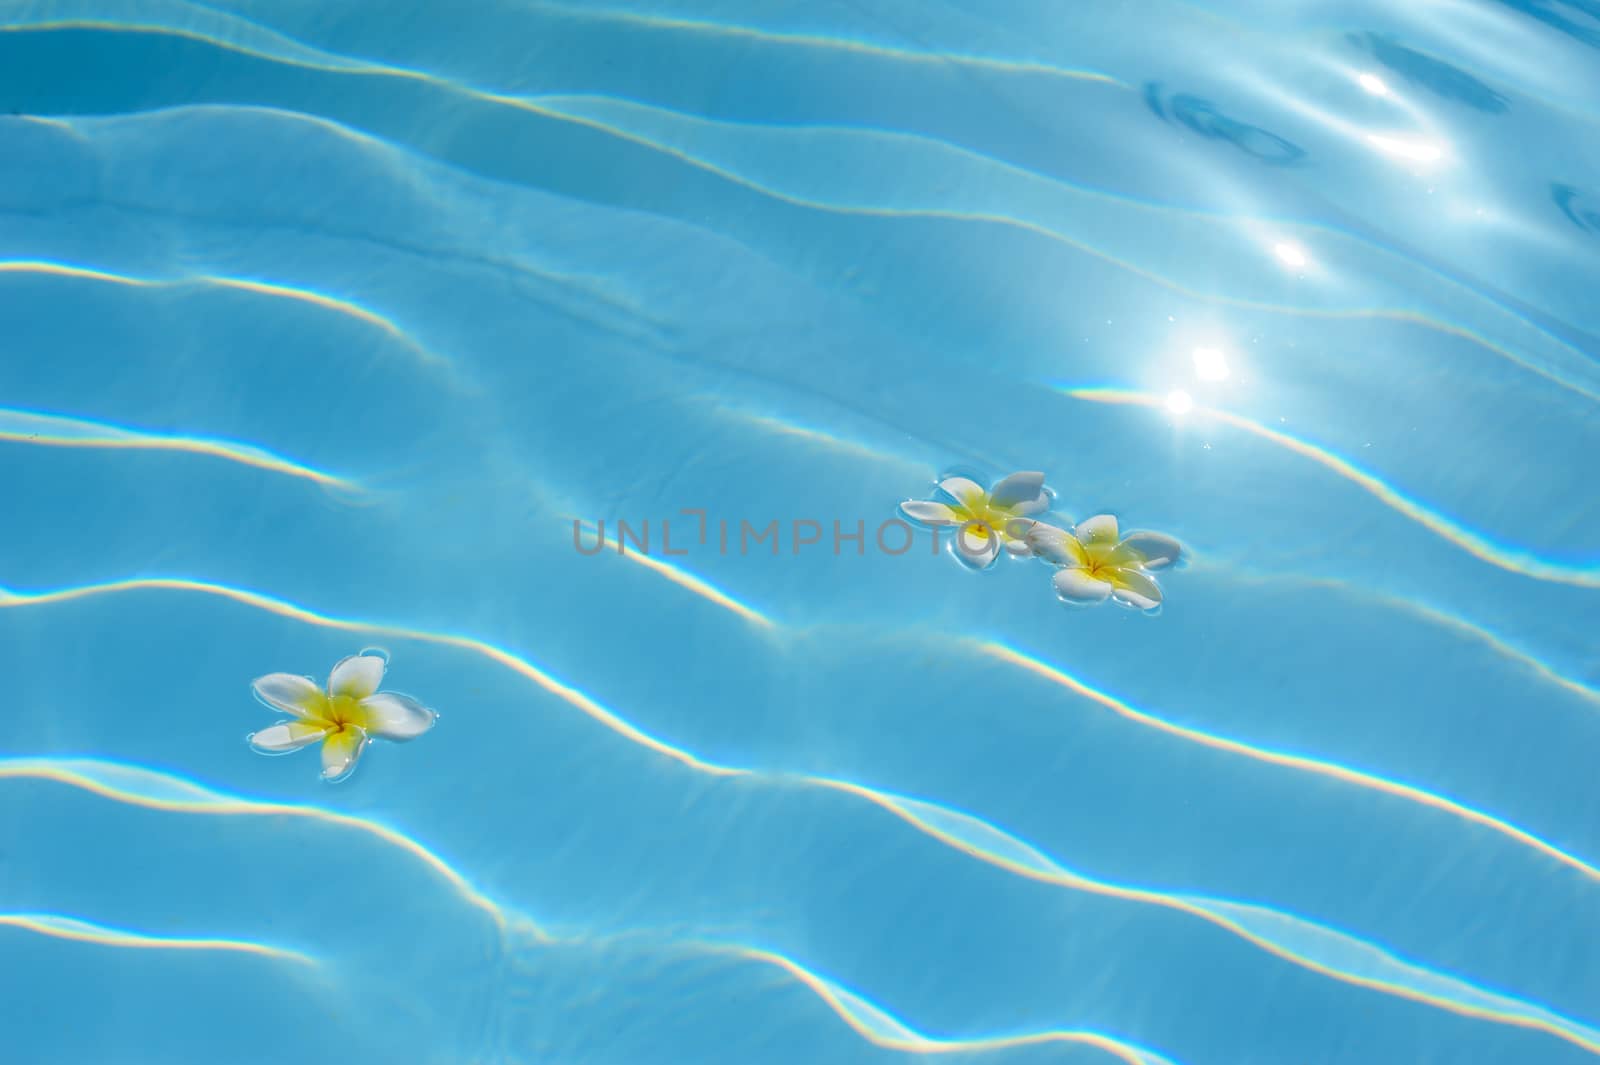 three bougainvillea flower floating in a blue pool.